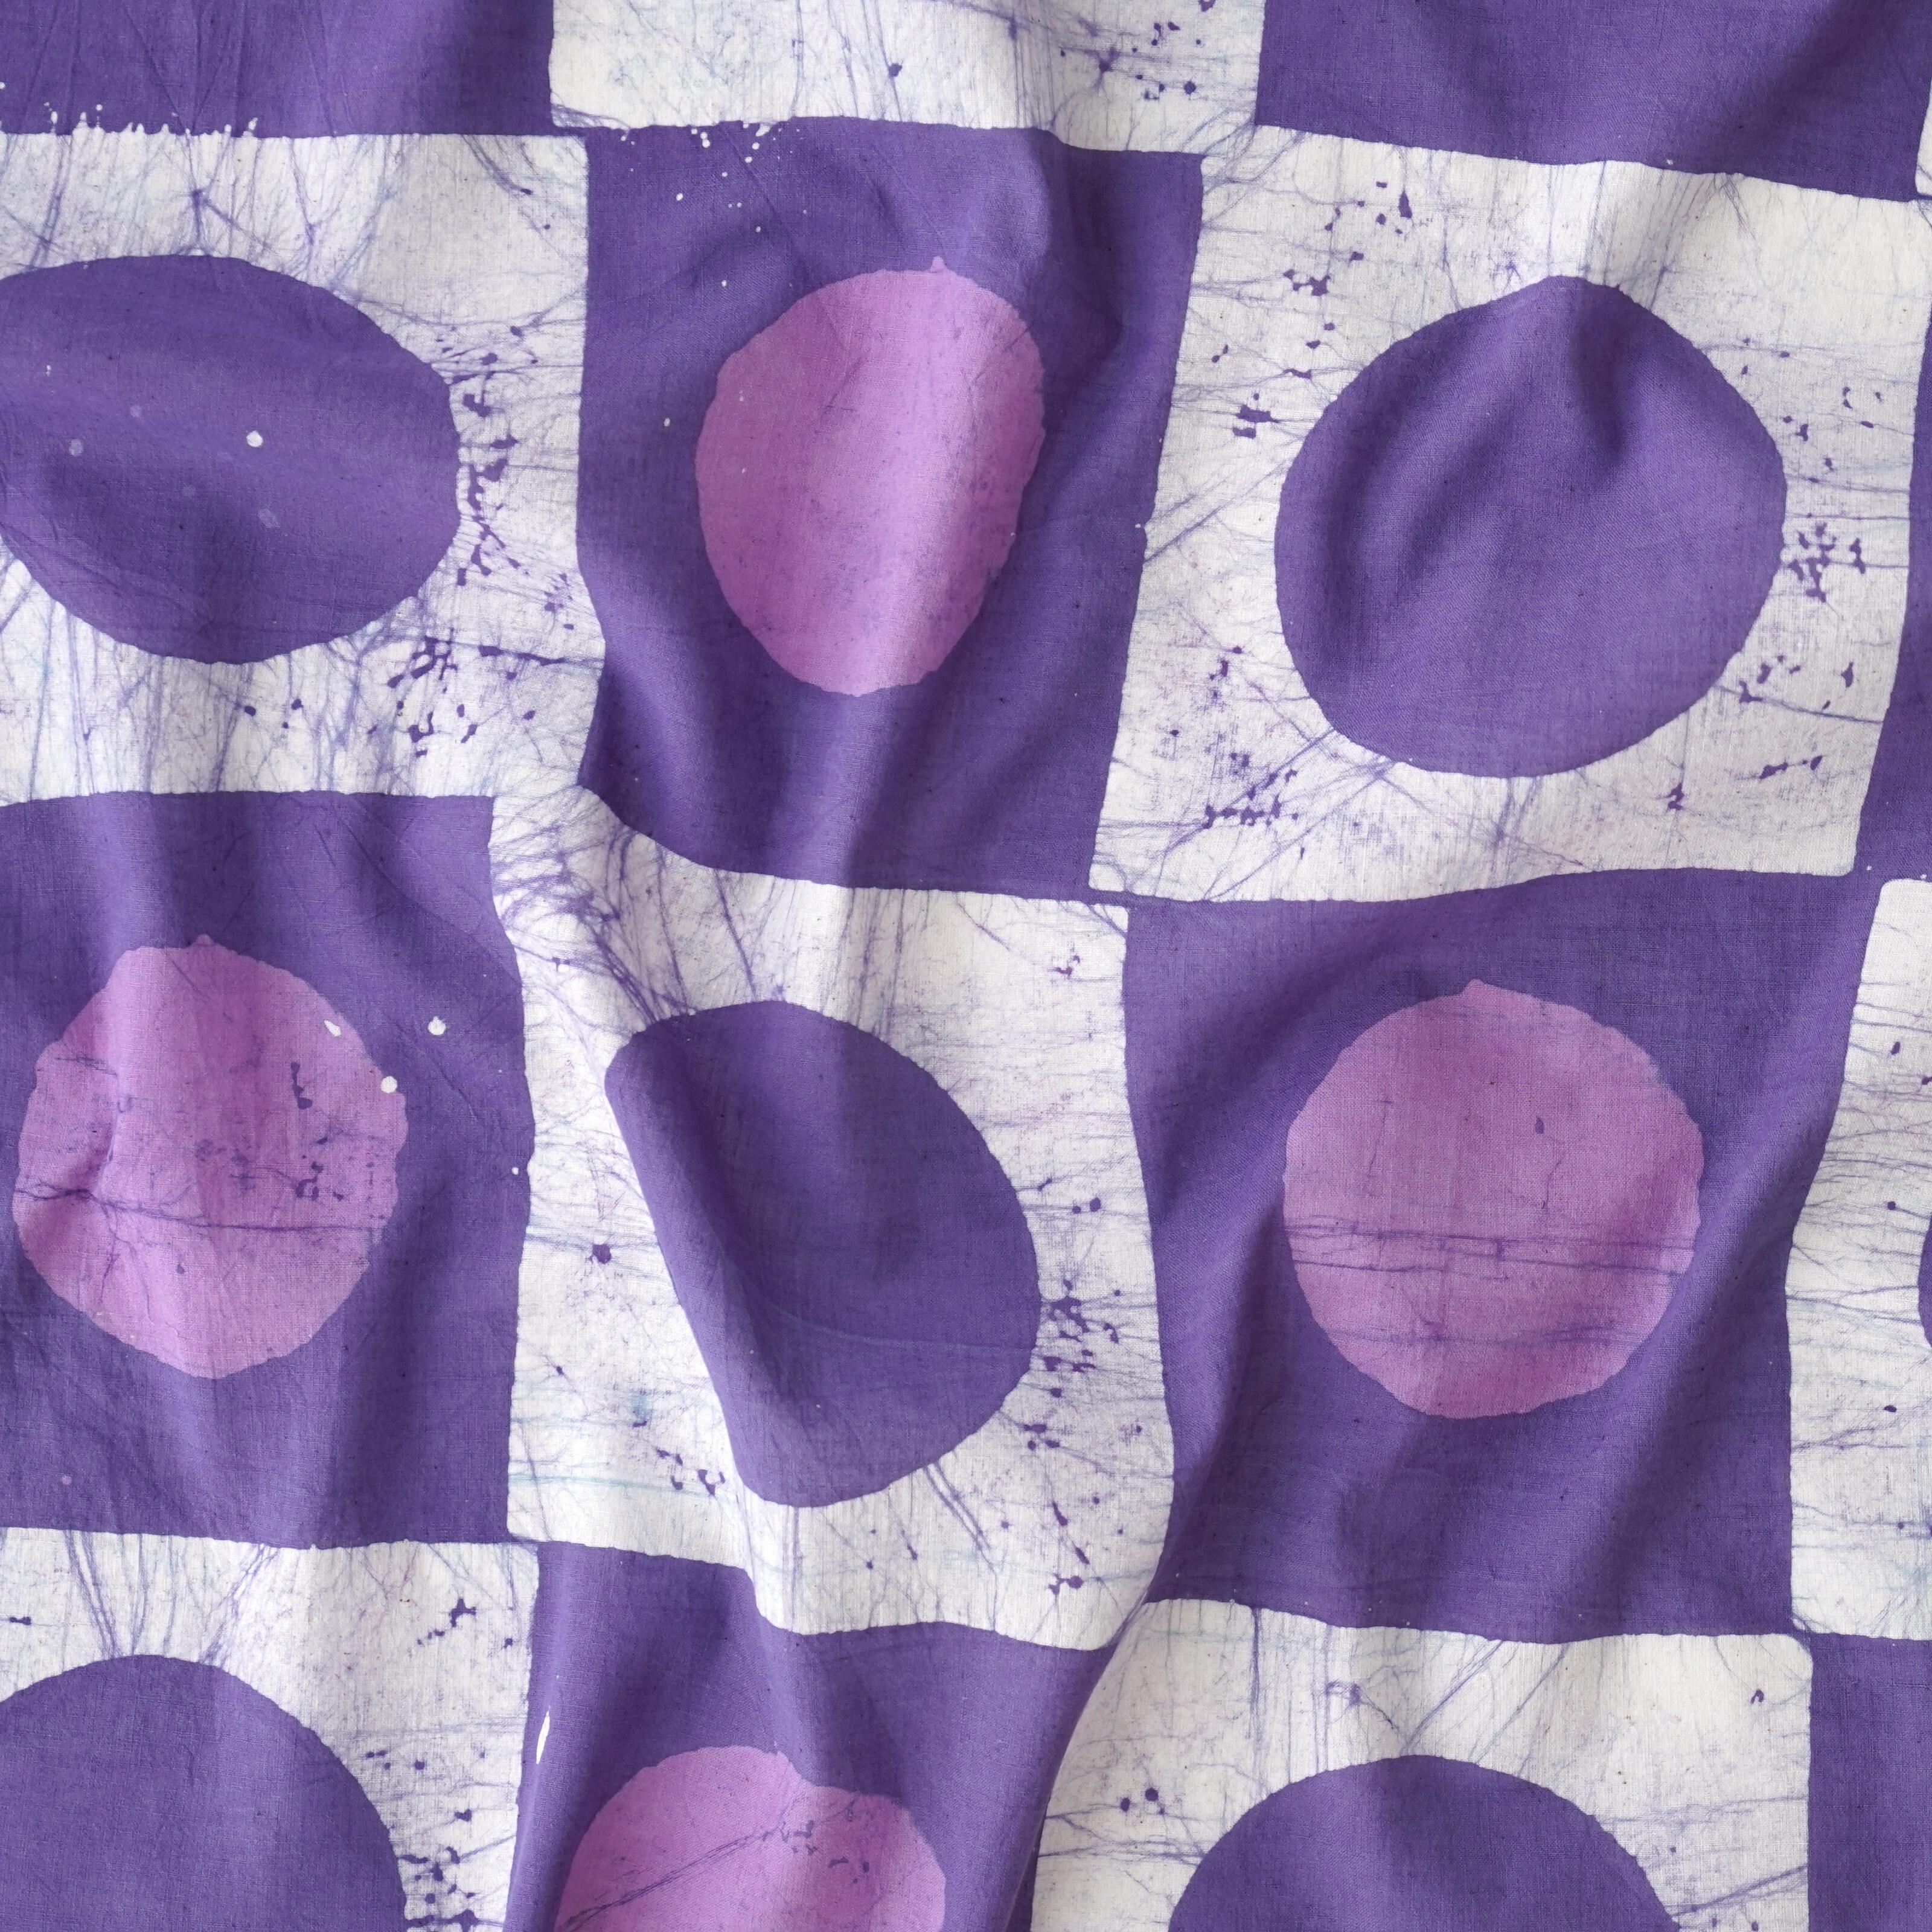 100% Block-Printed Batik Cotton Fabric From India - Soap Bubble Print - Purple Reactive Dye - Contrast